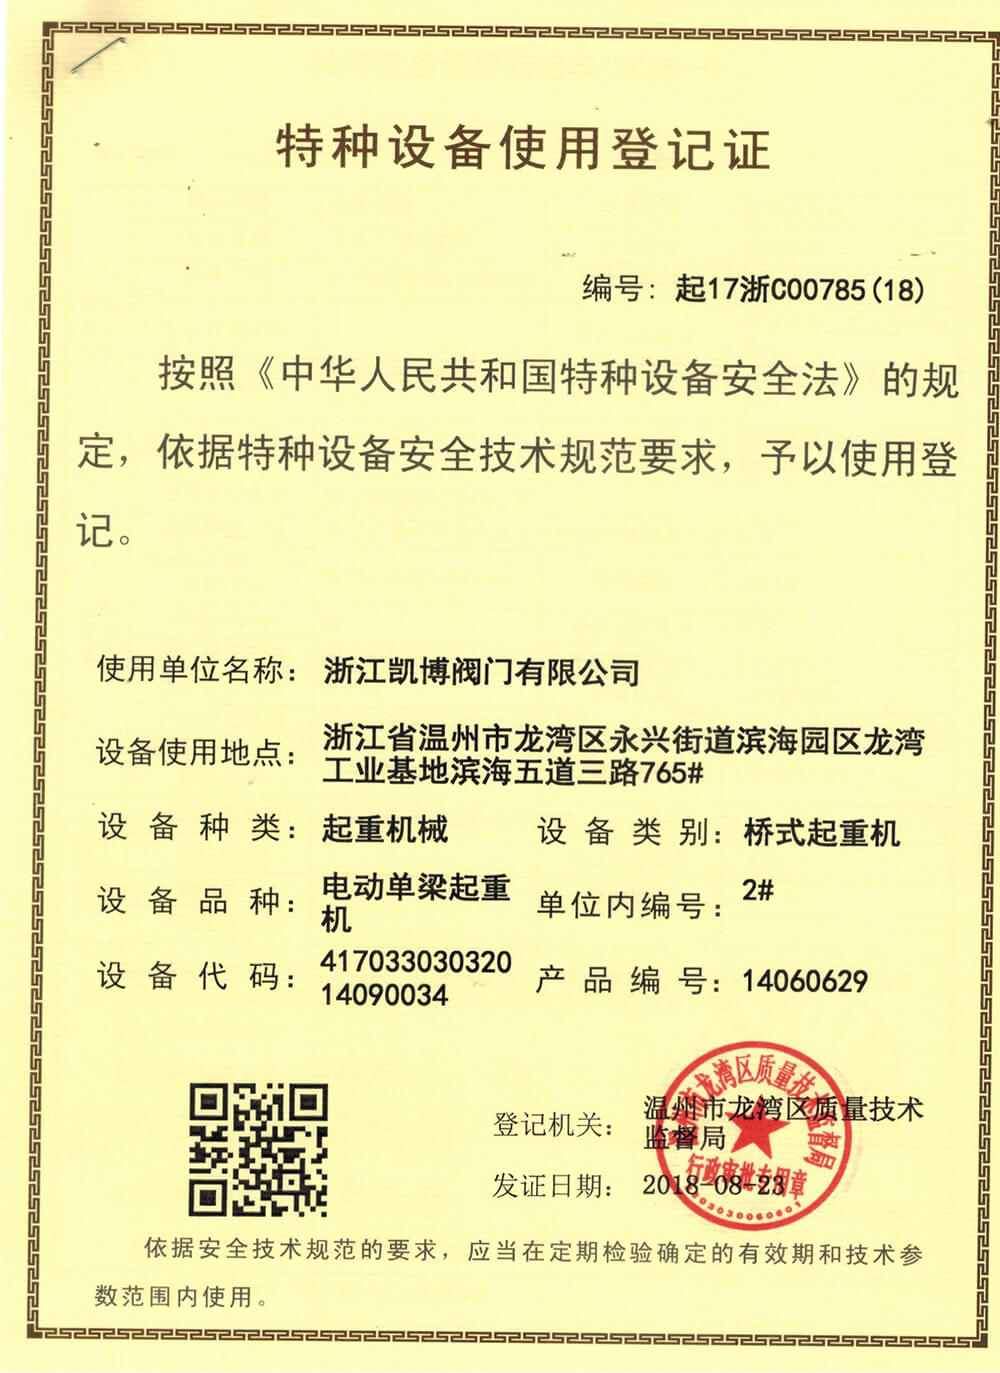 Special equipment certificate (2)